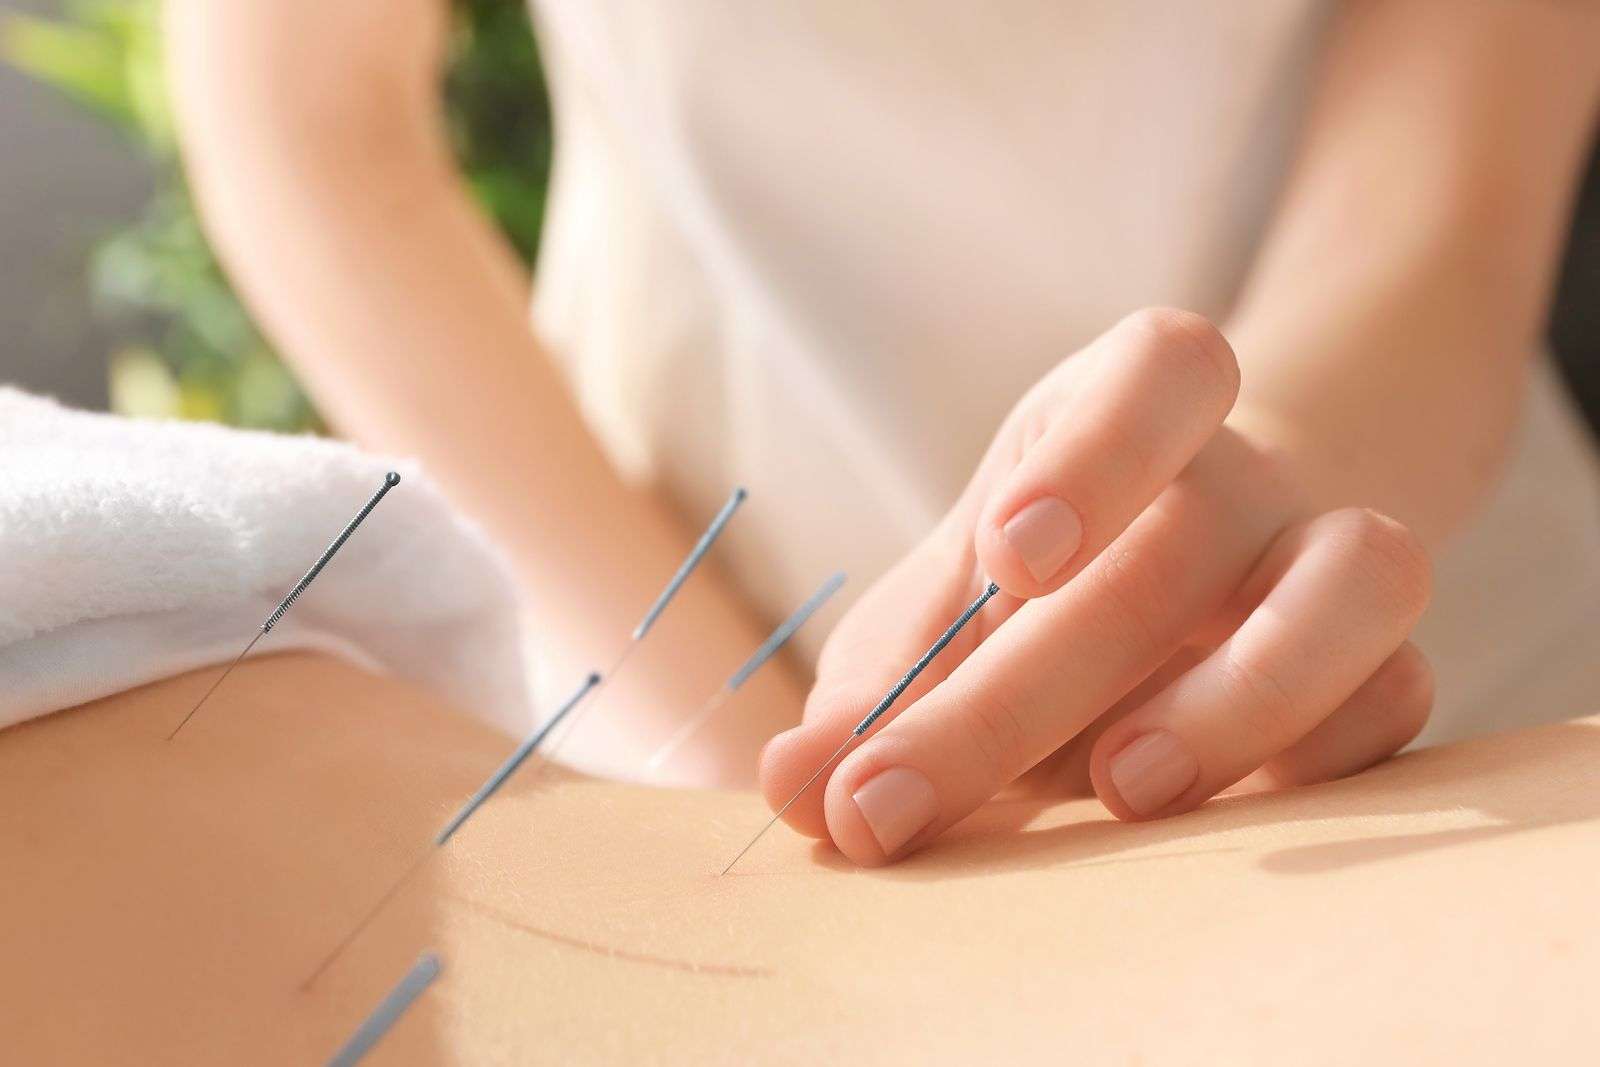 https://centroholisticowicca.com/wp-content/uploads/2020/09/todos-los-detalles-sobre-la-primera-sesion-de-acupuntura.jpeg